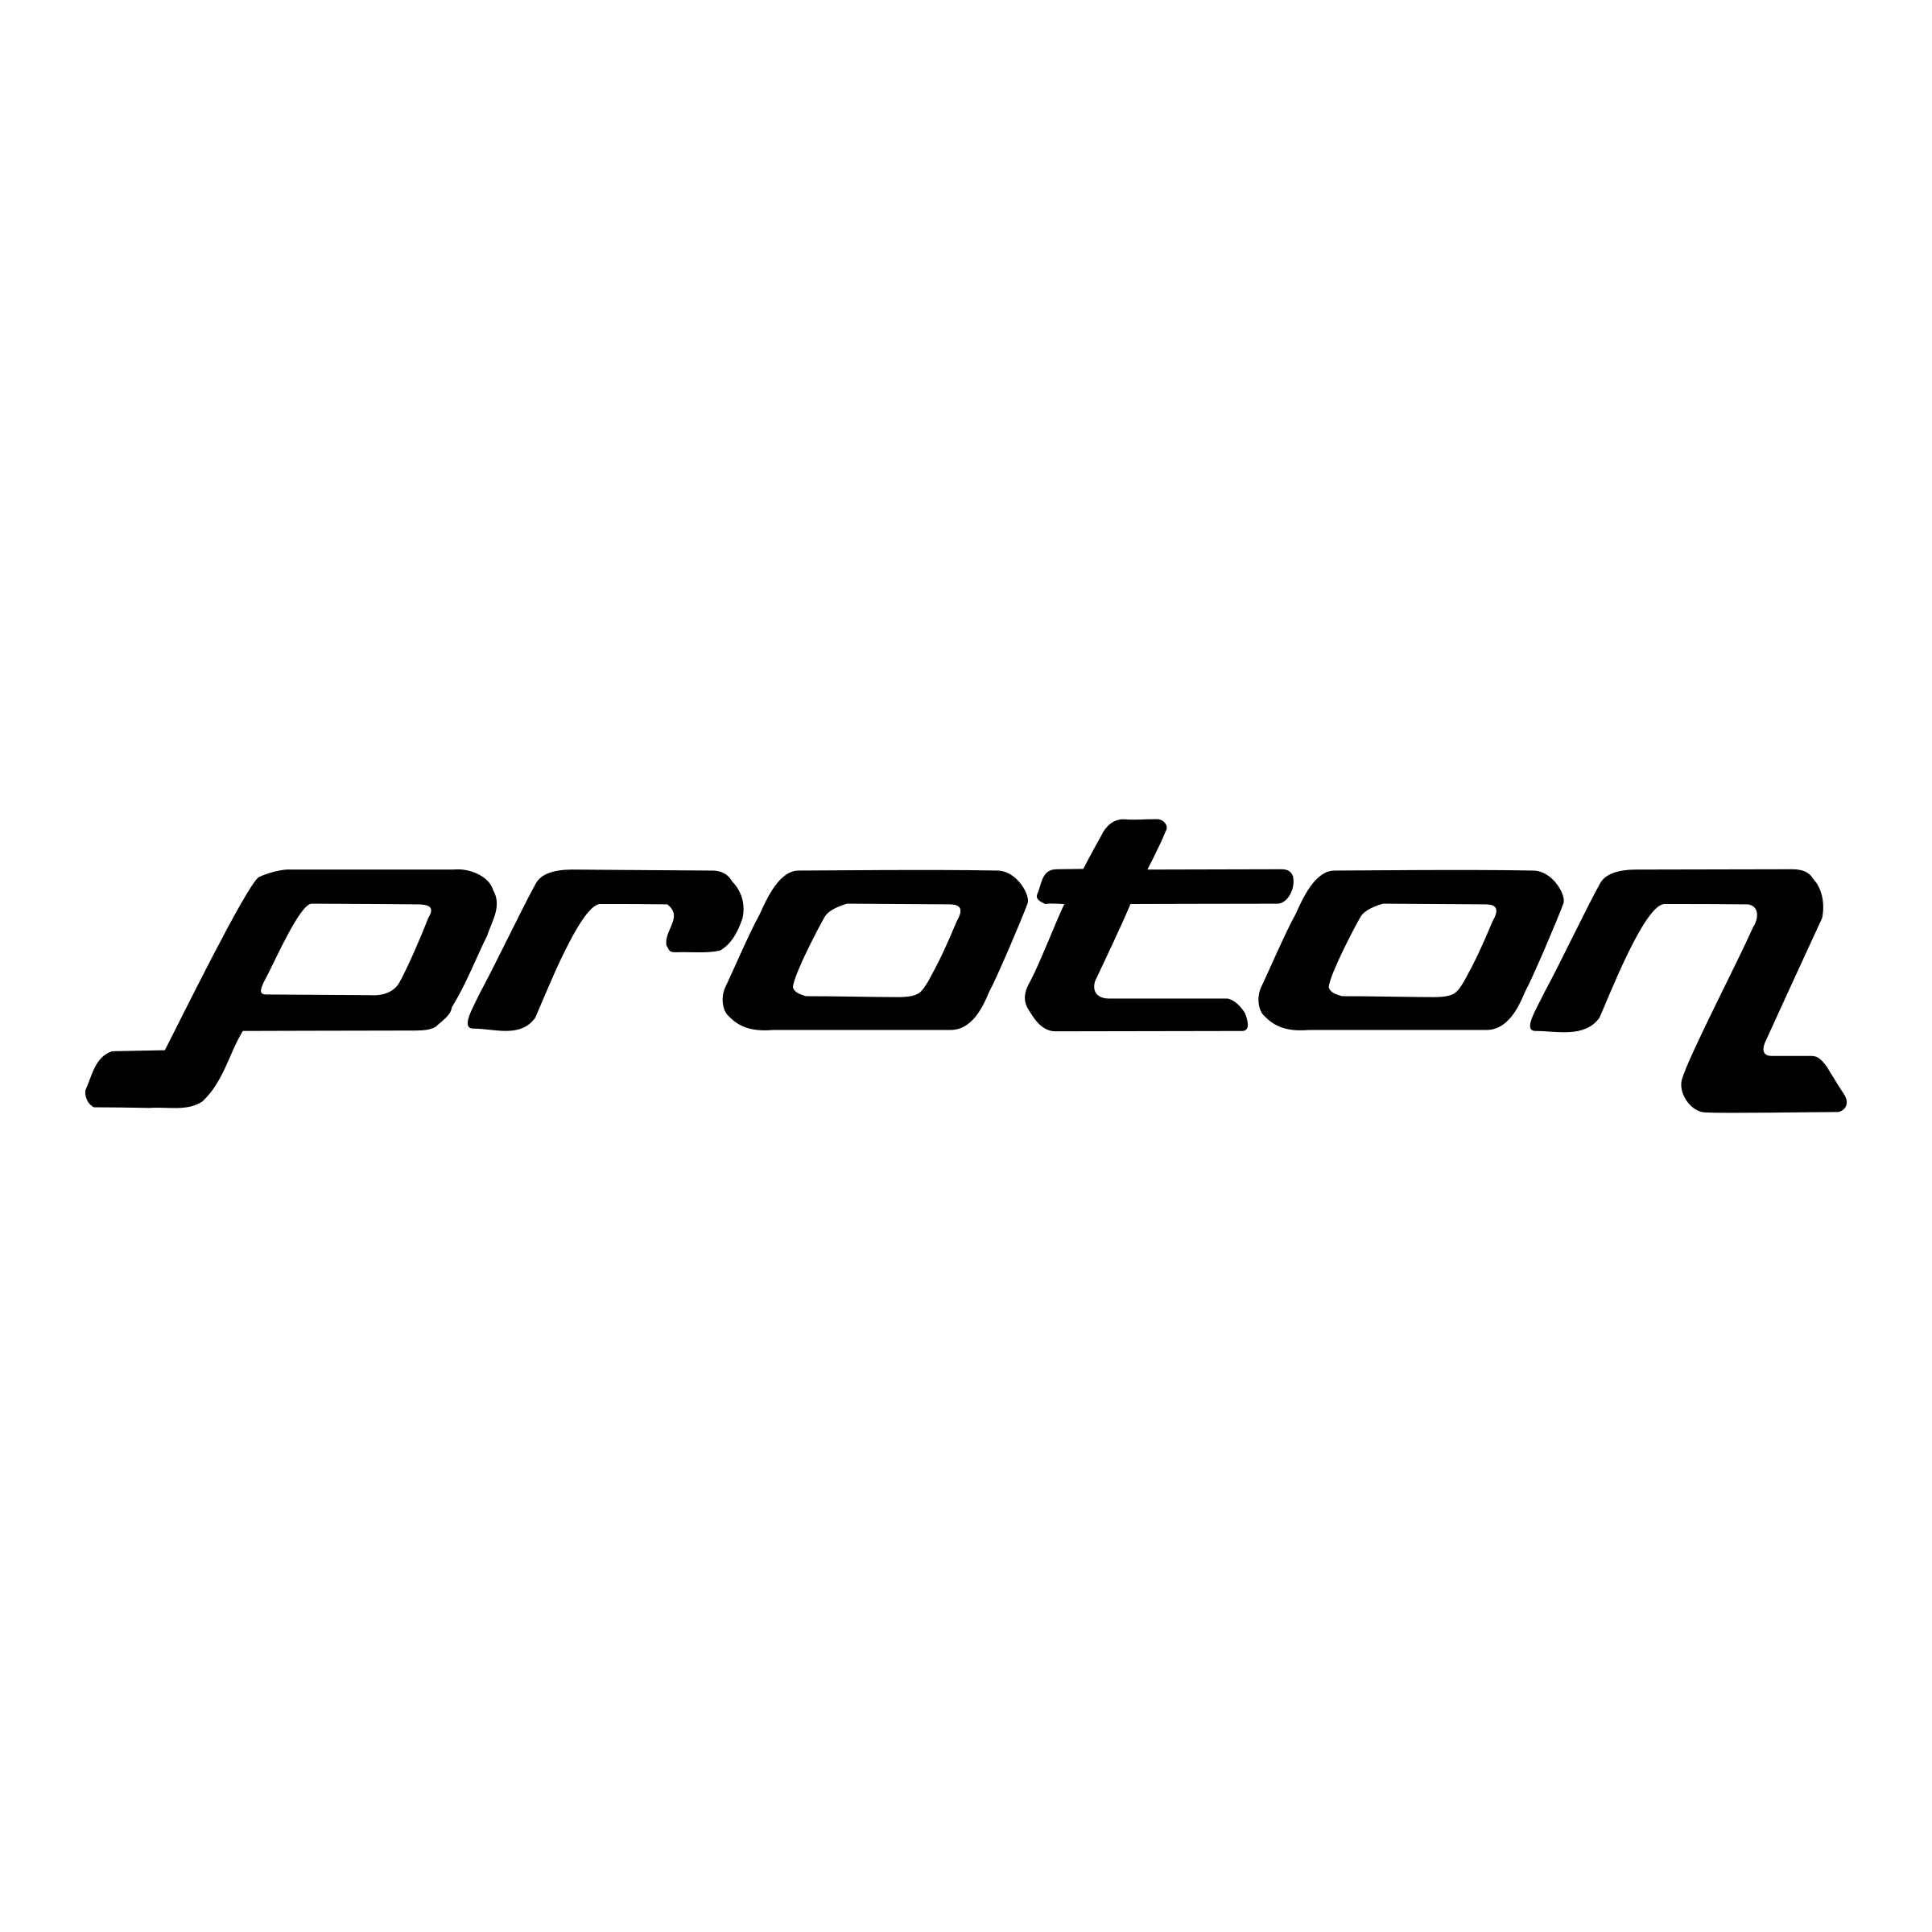 Proton Logo - Proton Logo PNG Transparent & SVG Vector - Freebie Supply